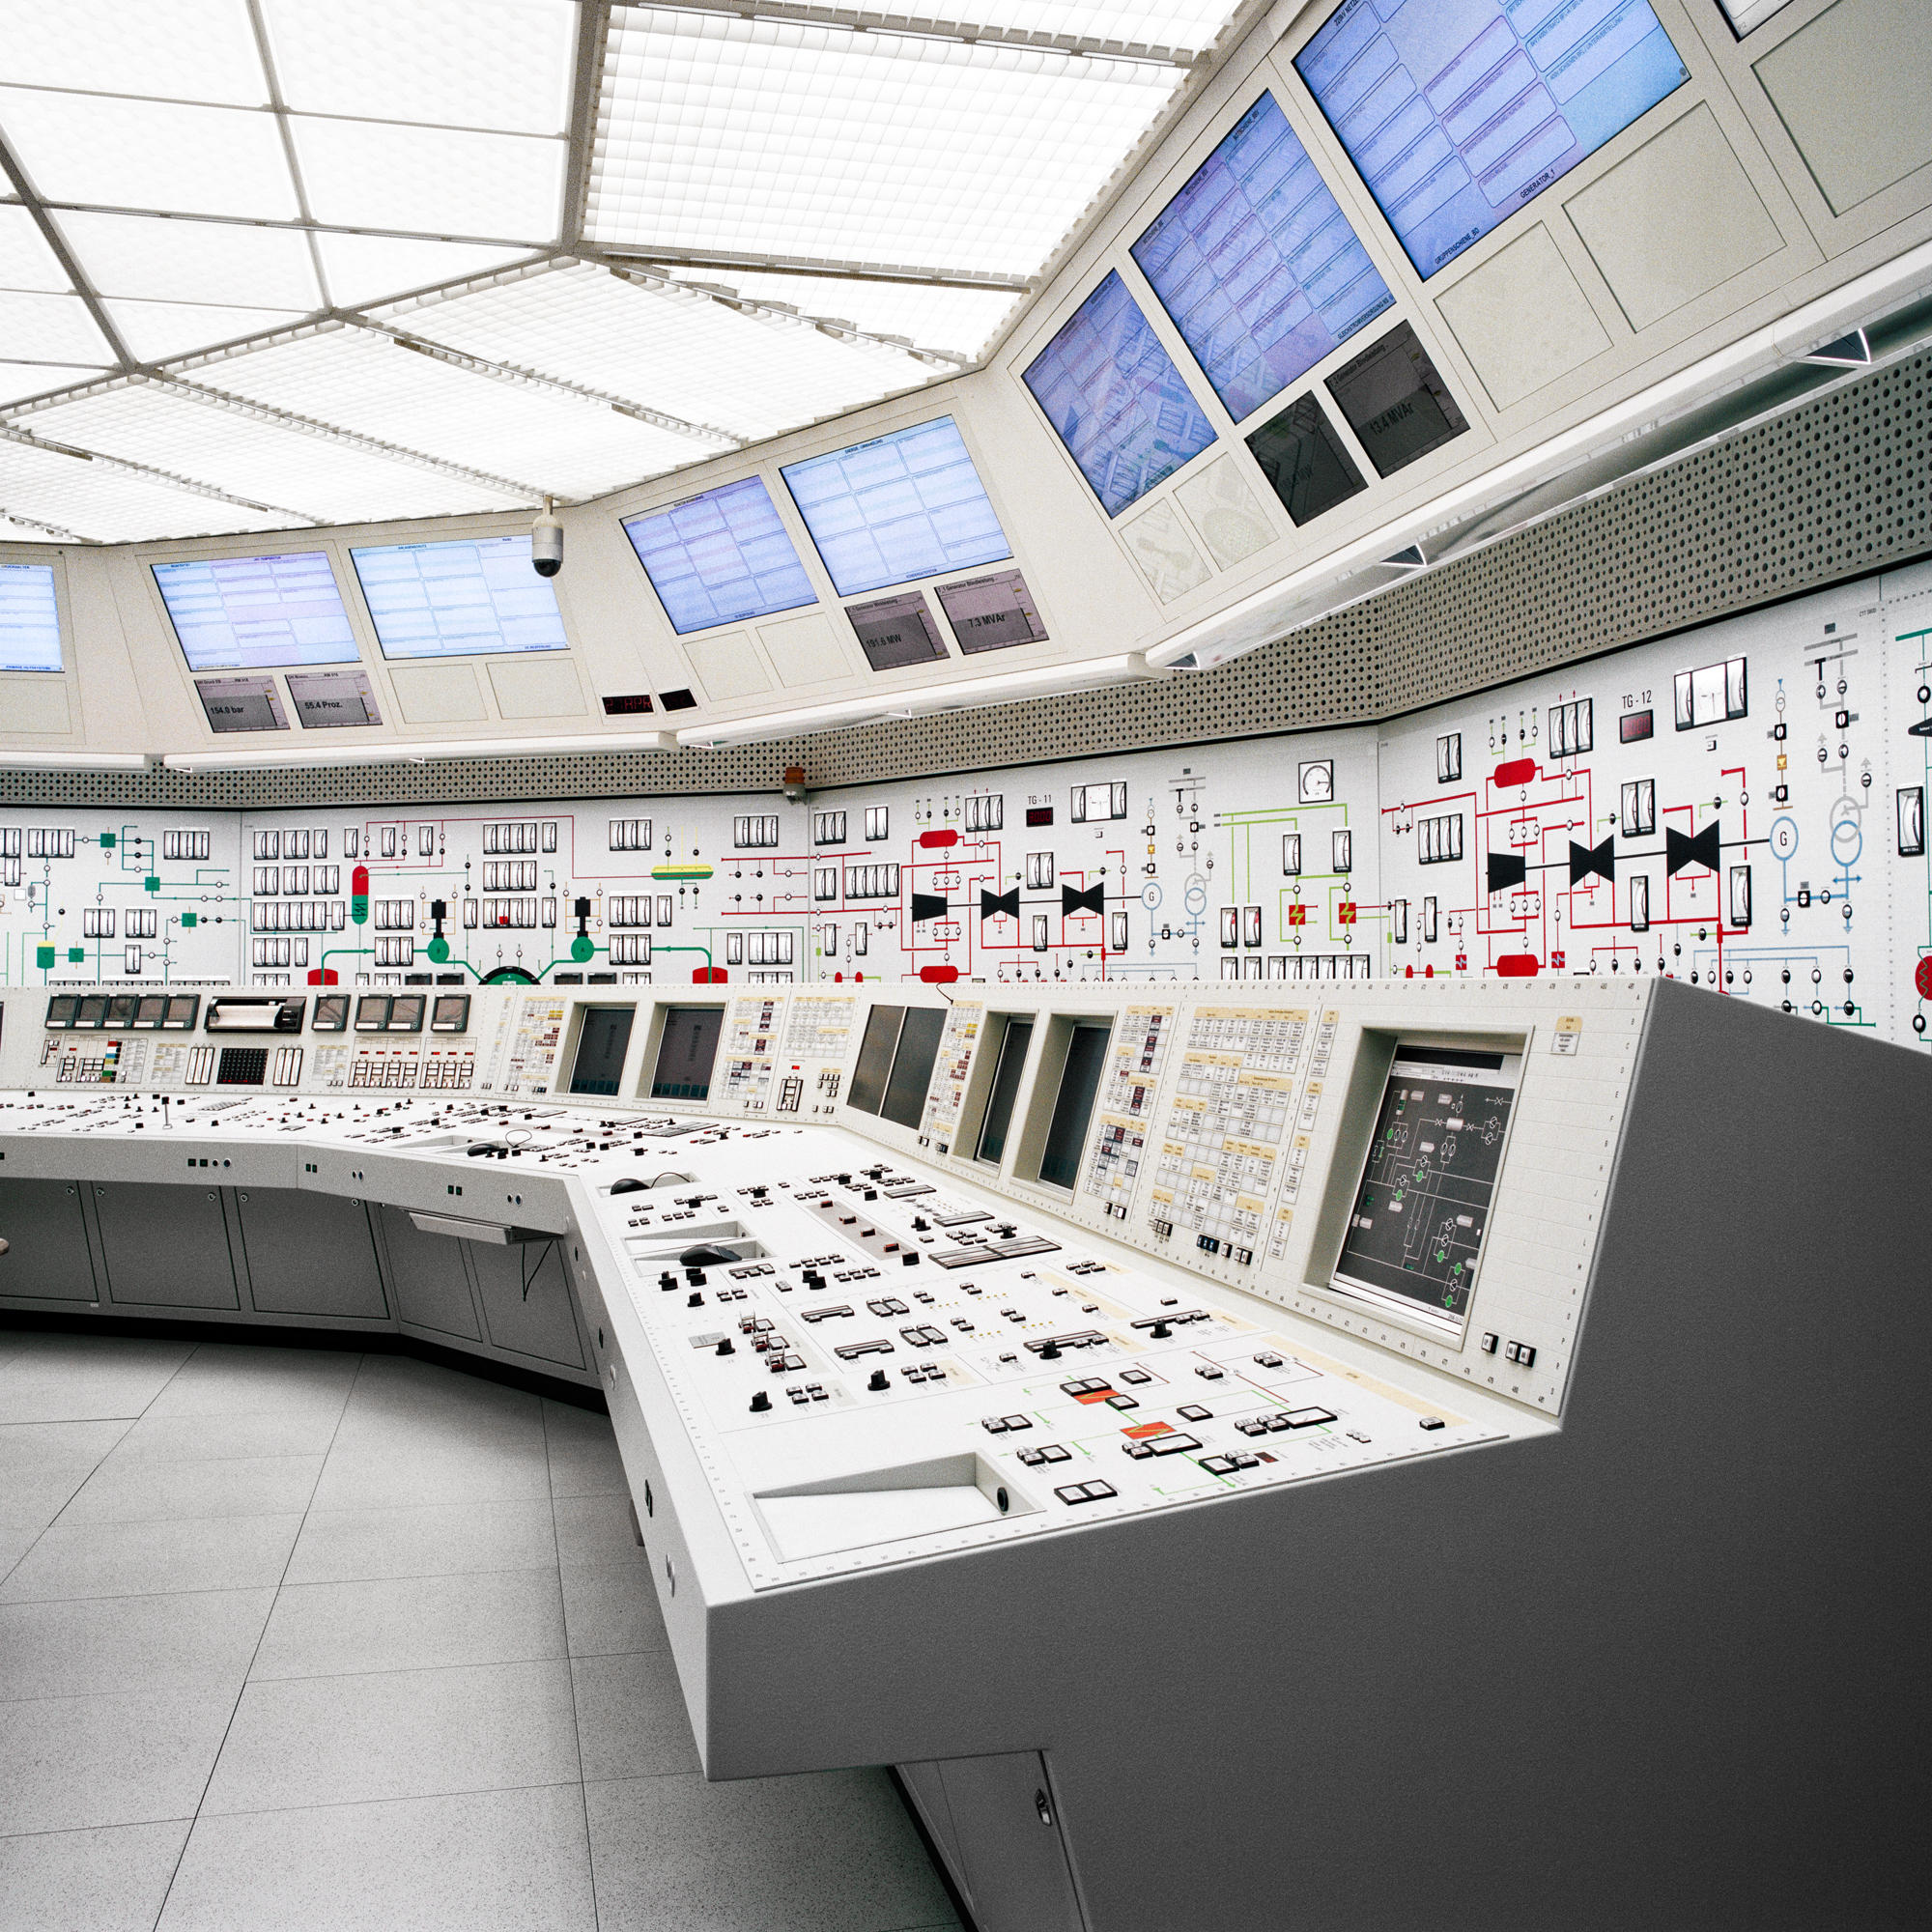 Beznau核电站模拟指挥室, Döttingen (阿尔高州)